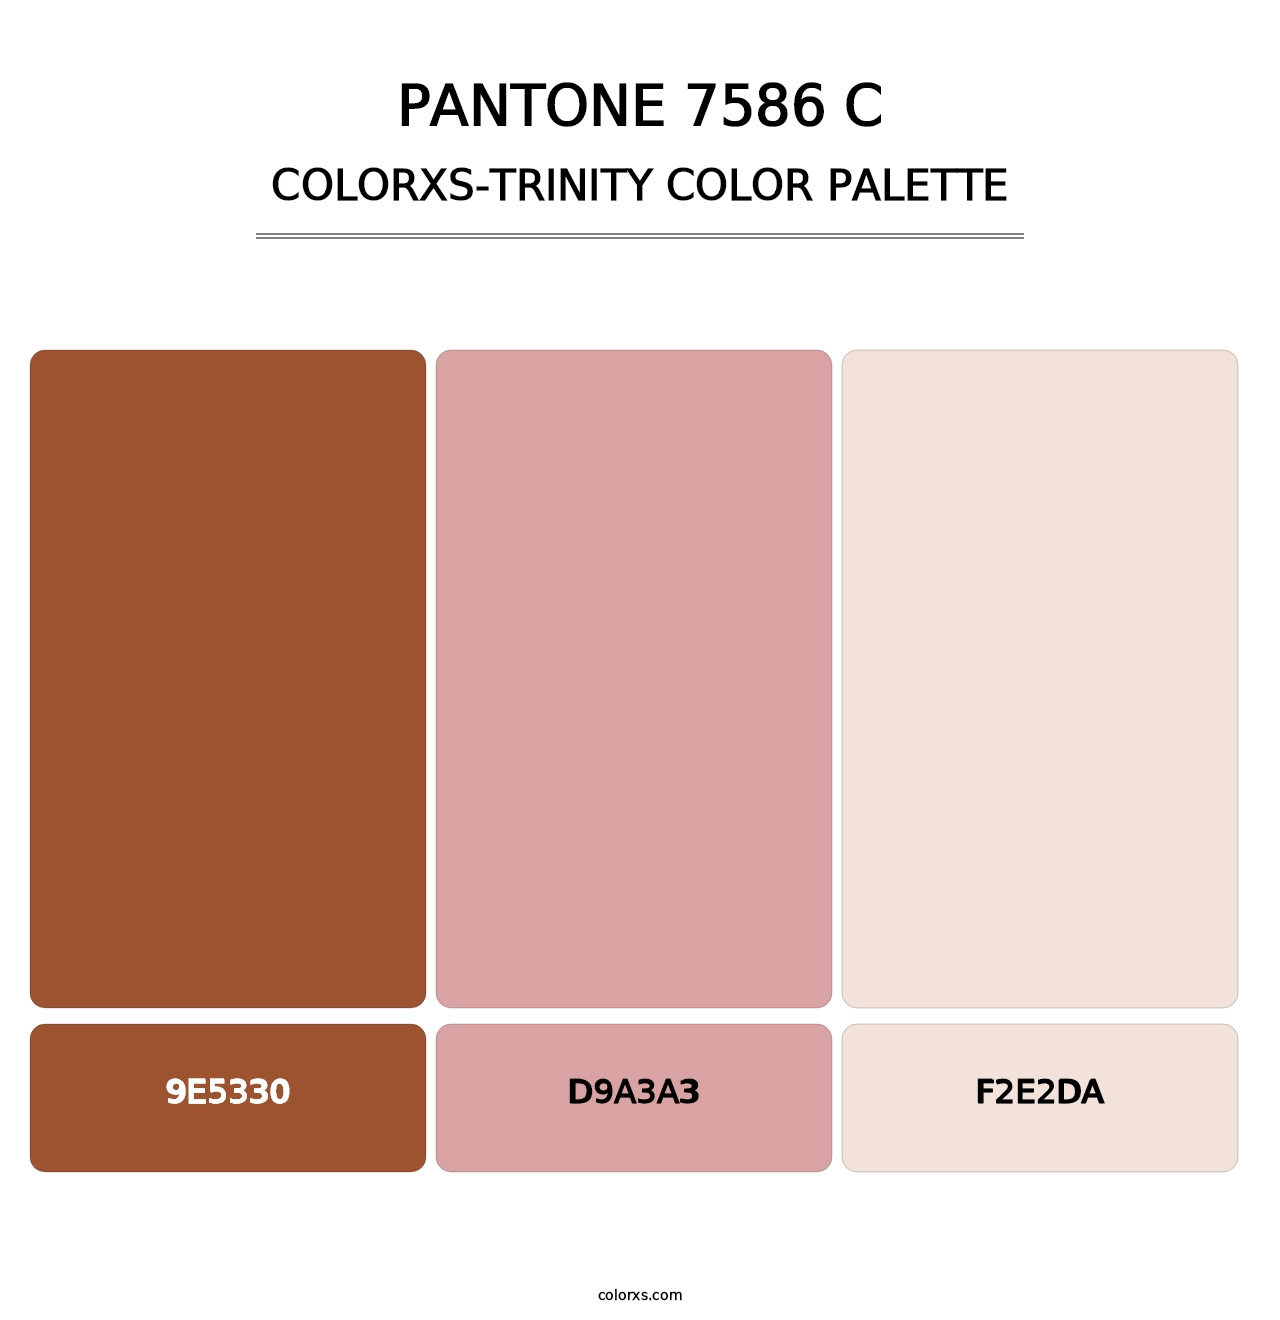 PANTONE 7586 C - Colorxs Trinity Palette